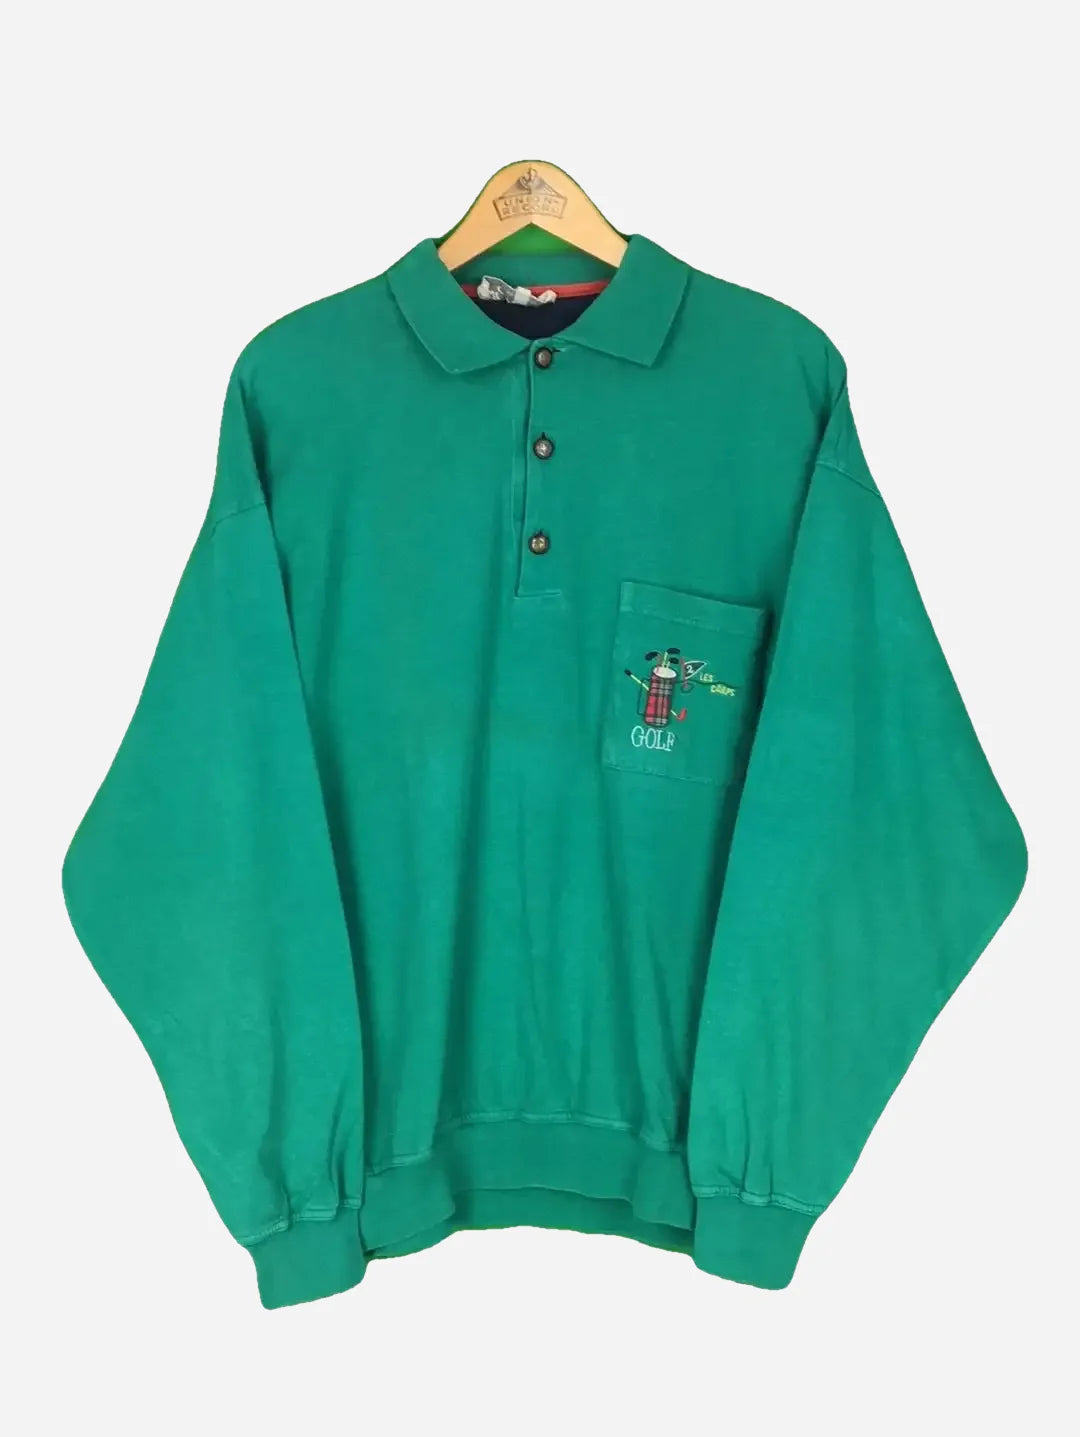 Golf Knopf Sweater (M)